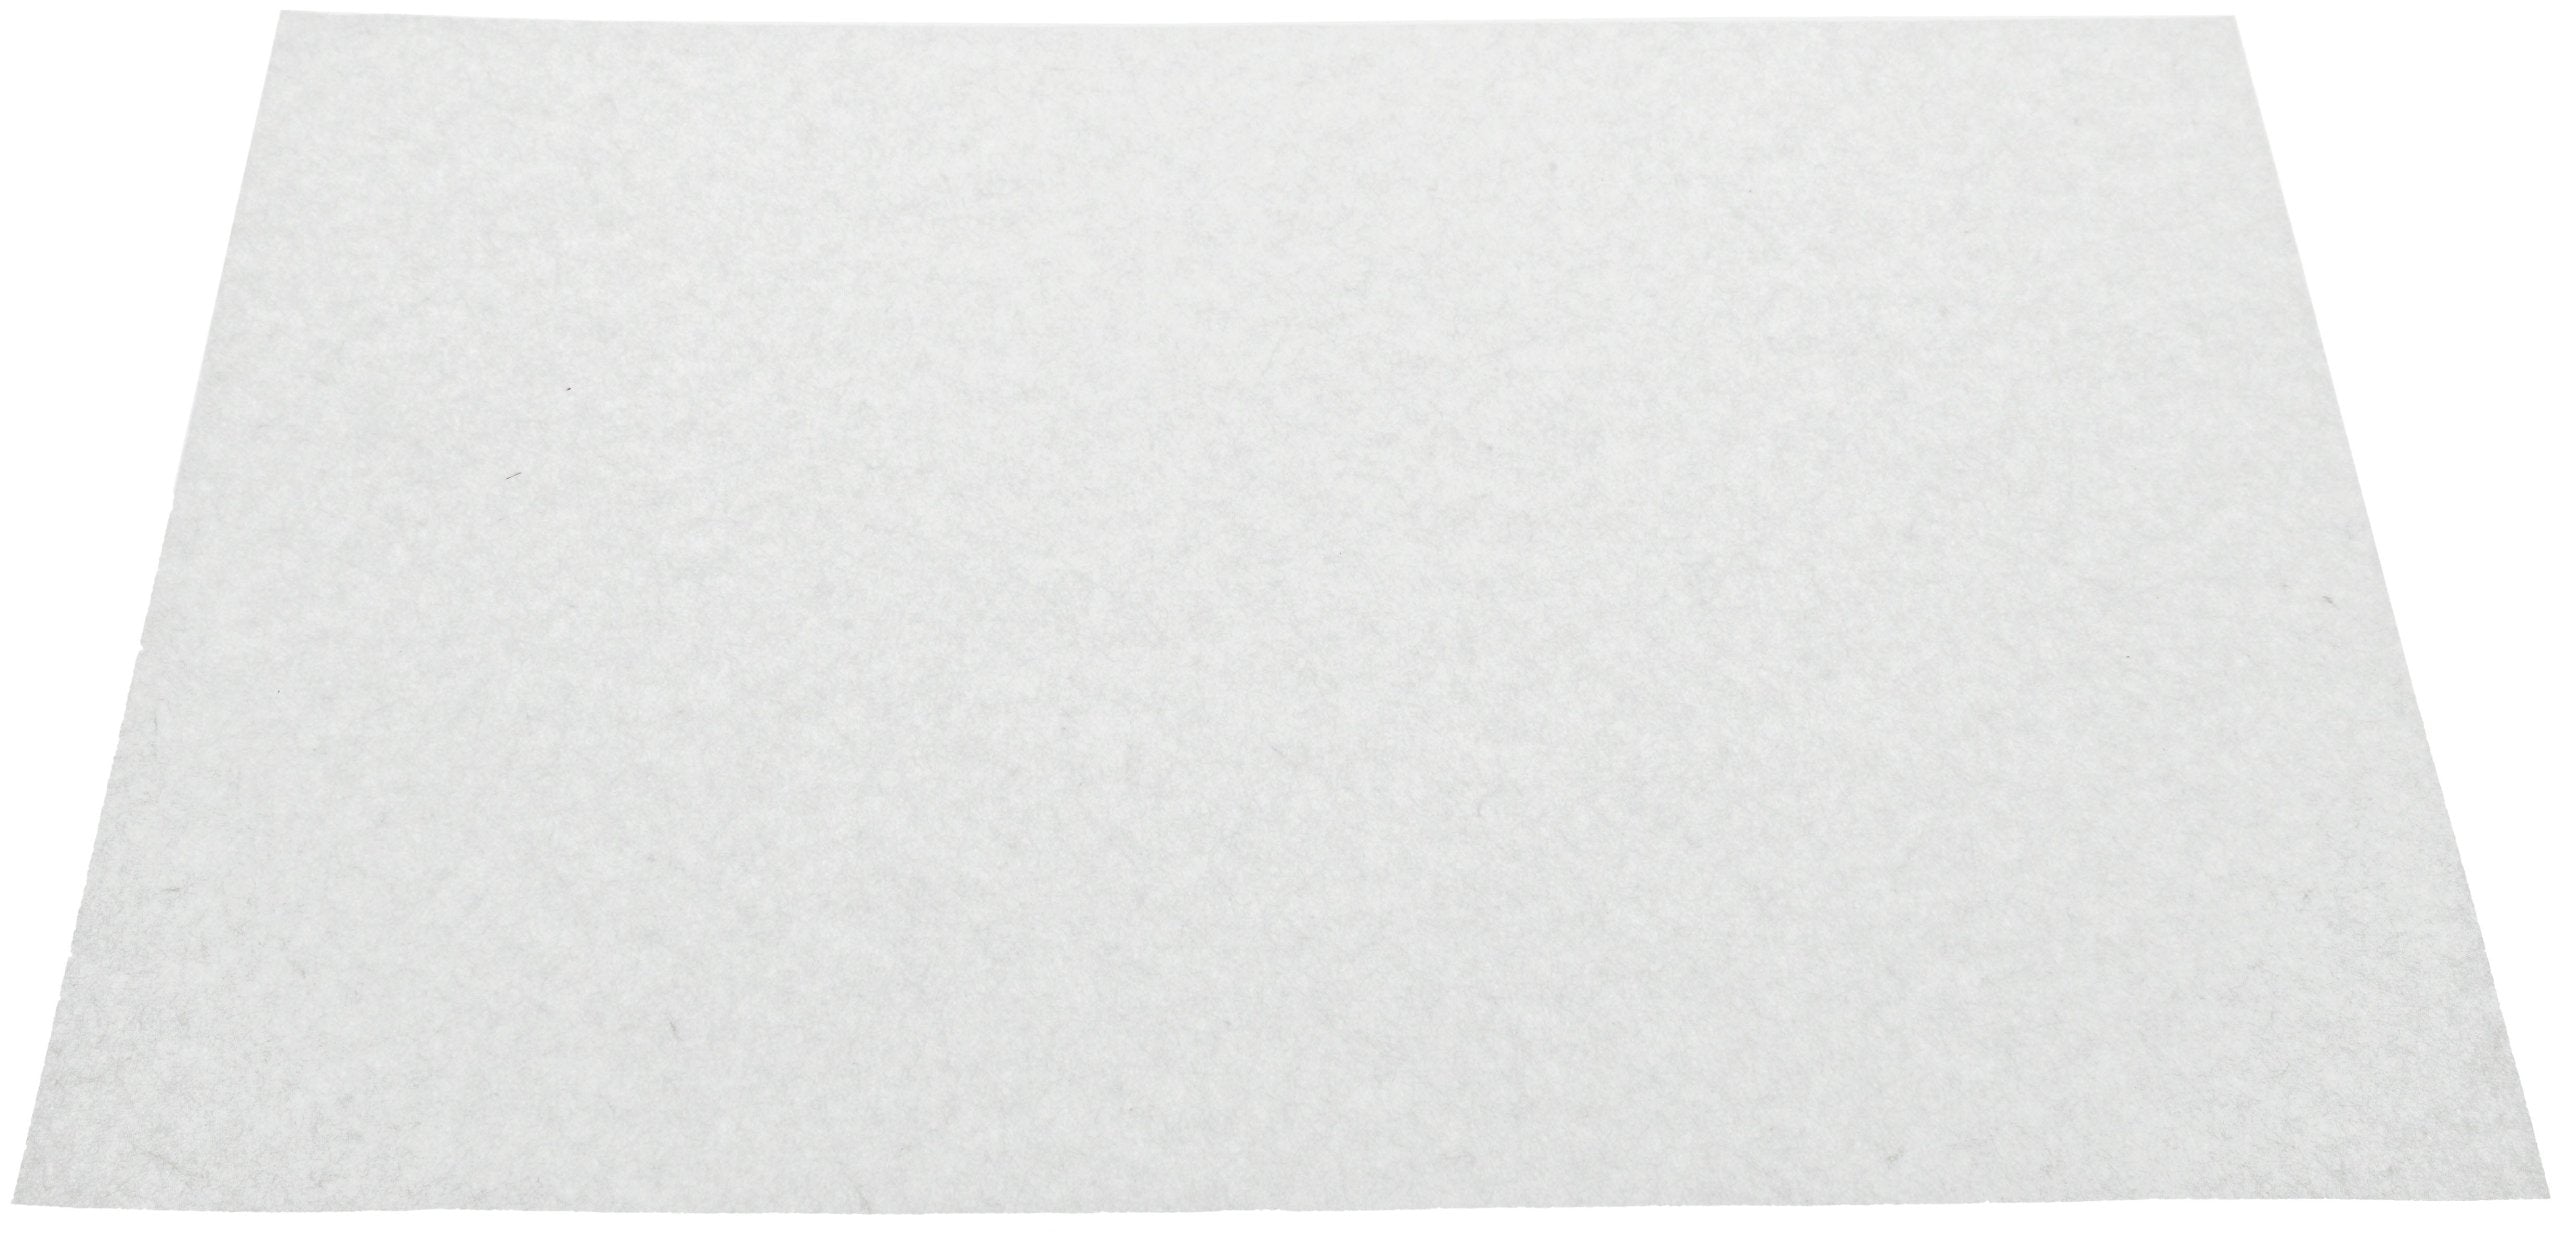 Whatman 10382461 Cellulose Chromatography Paper, Grade 2668 Chr Sheets, 58 x 60cm, 100/pk